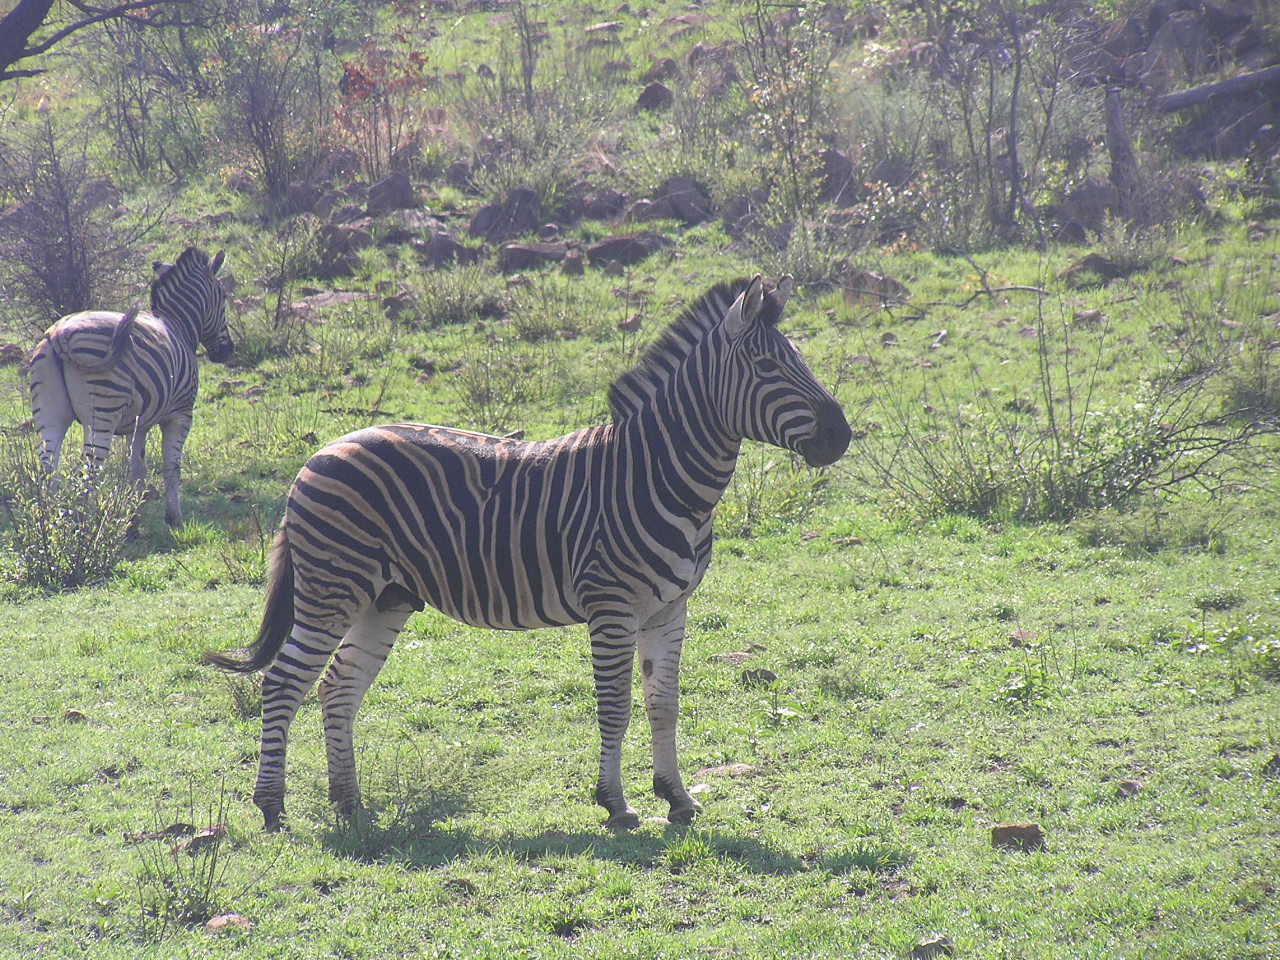 636 Pilanesberg zebra